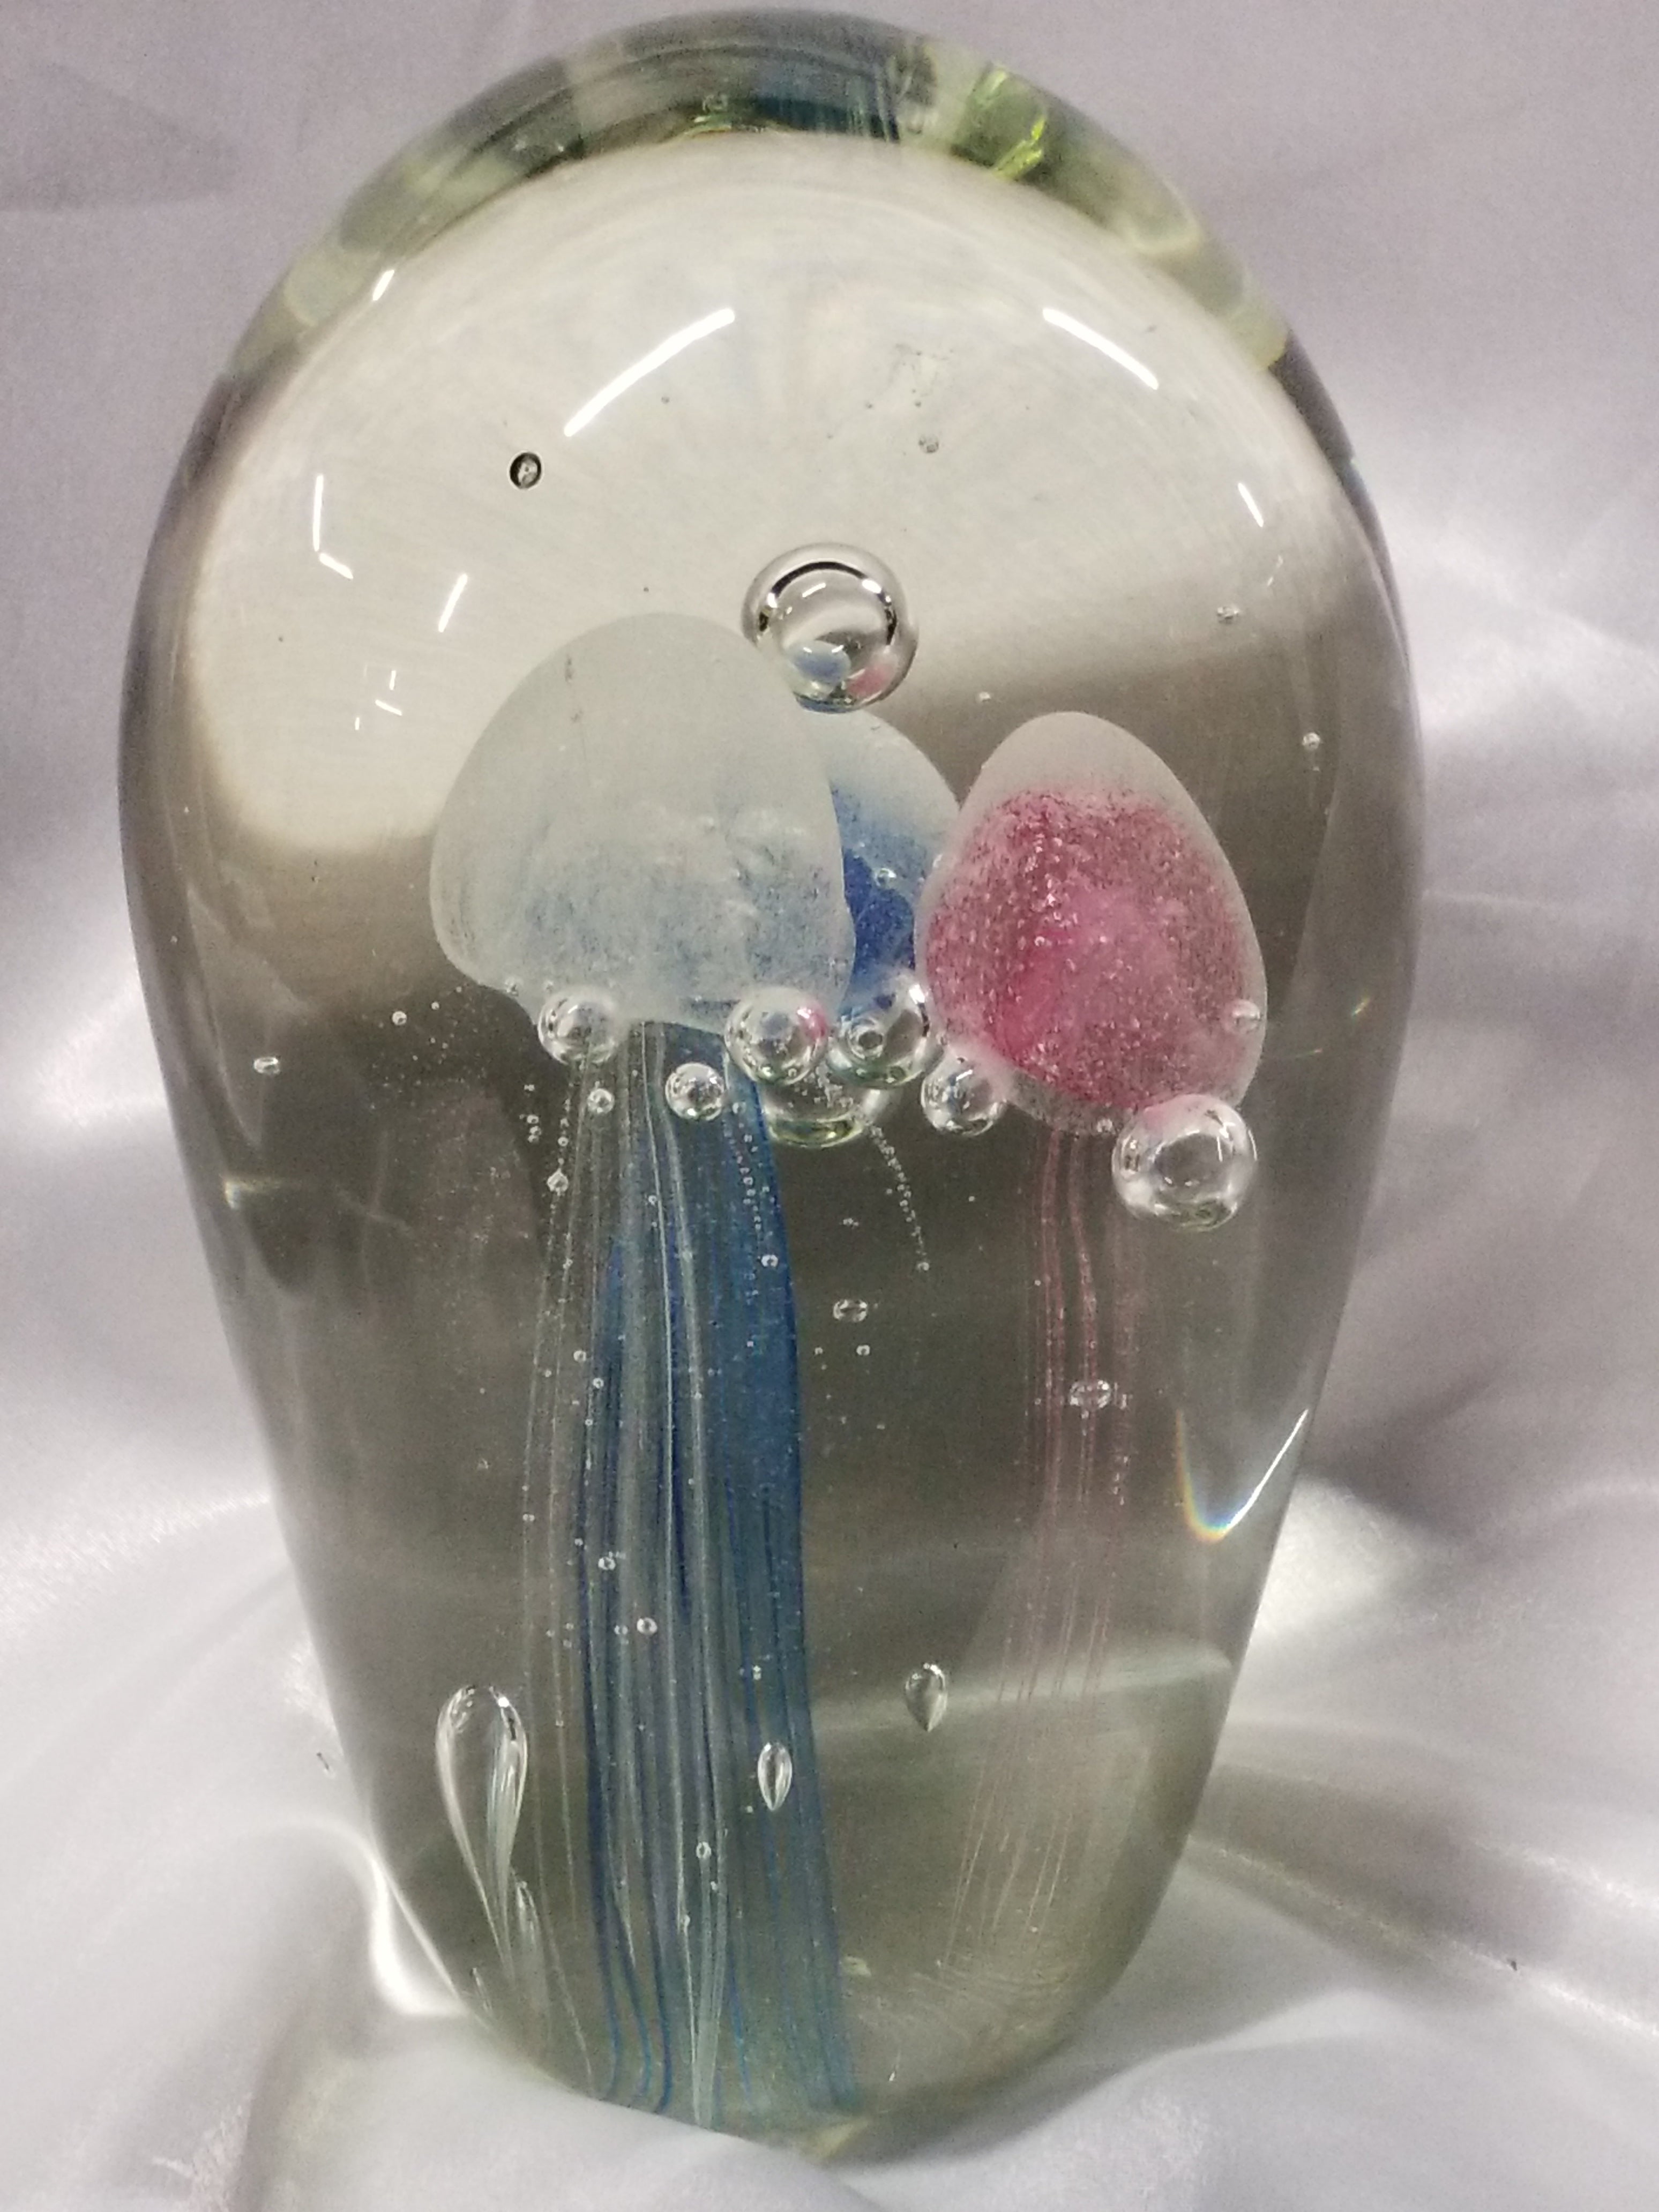 Glass Paperweight - Three Jellyfish - Glow in the Dark